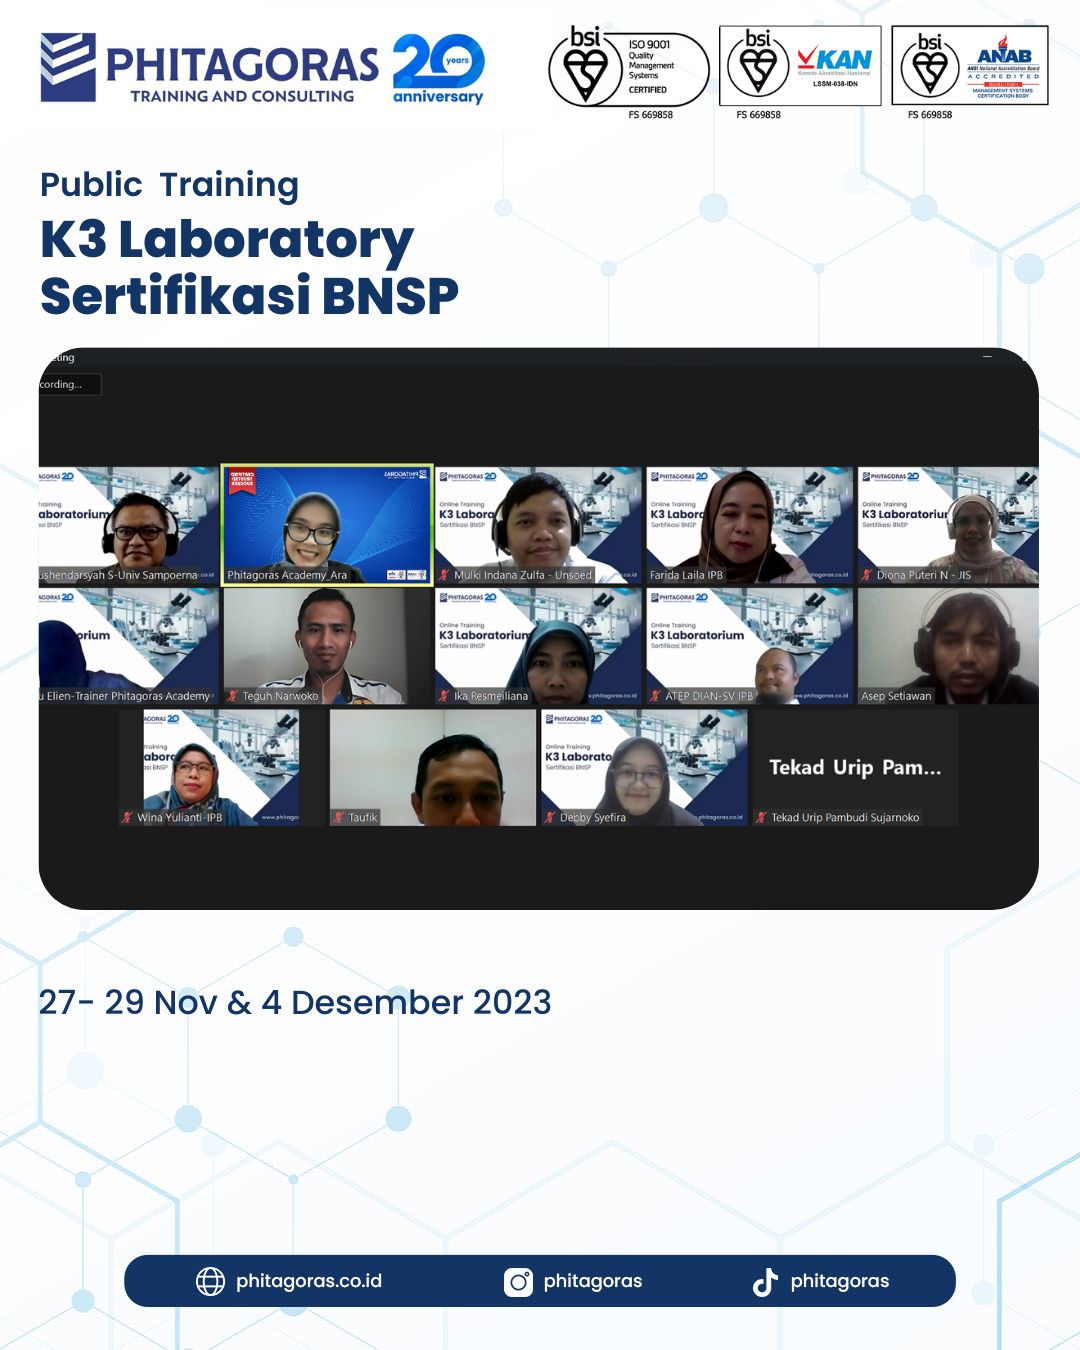 Public Training K3 Laboratory Sertifikasi BNSP